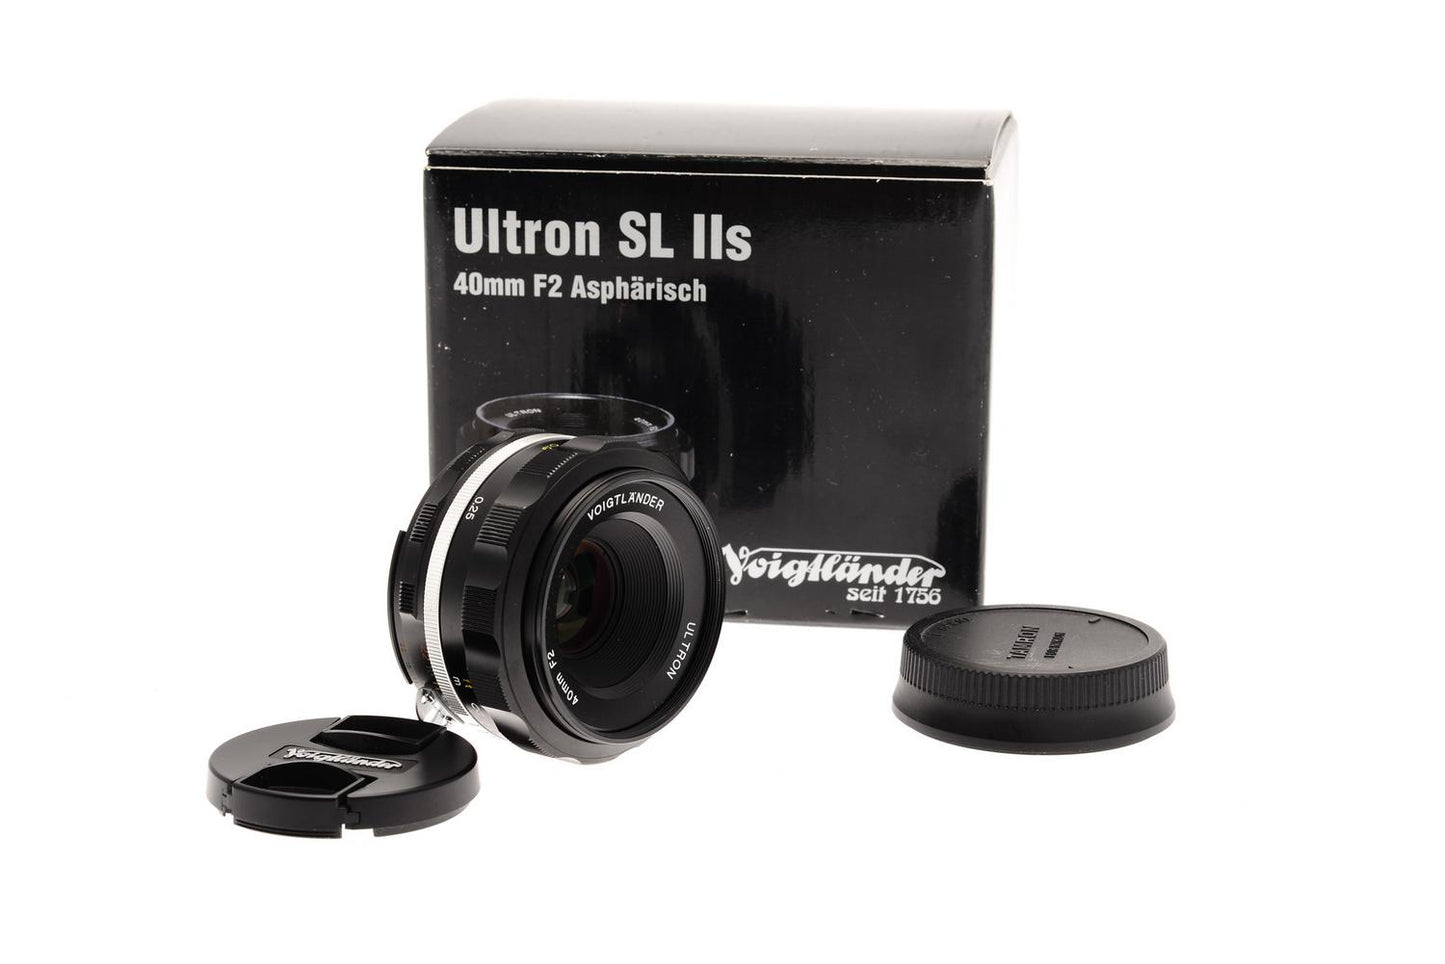 Voigtländer 40mm f2 Ultron SL IIs Aspherical AI-S - Lens